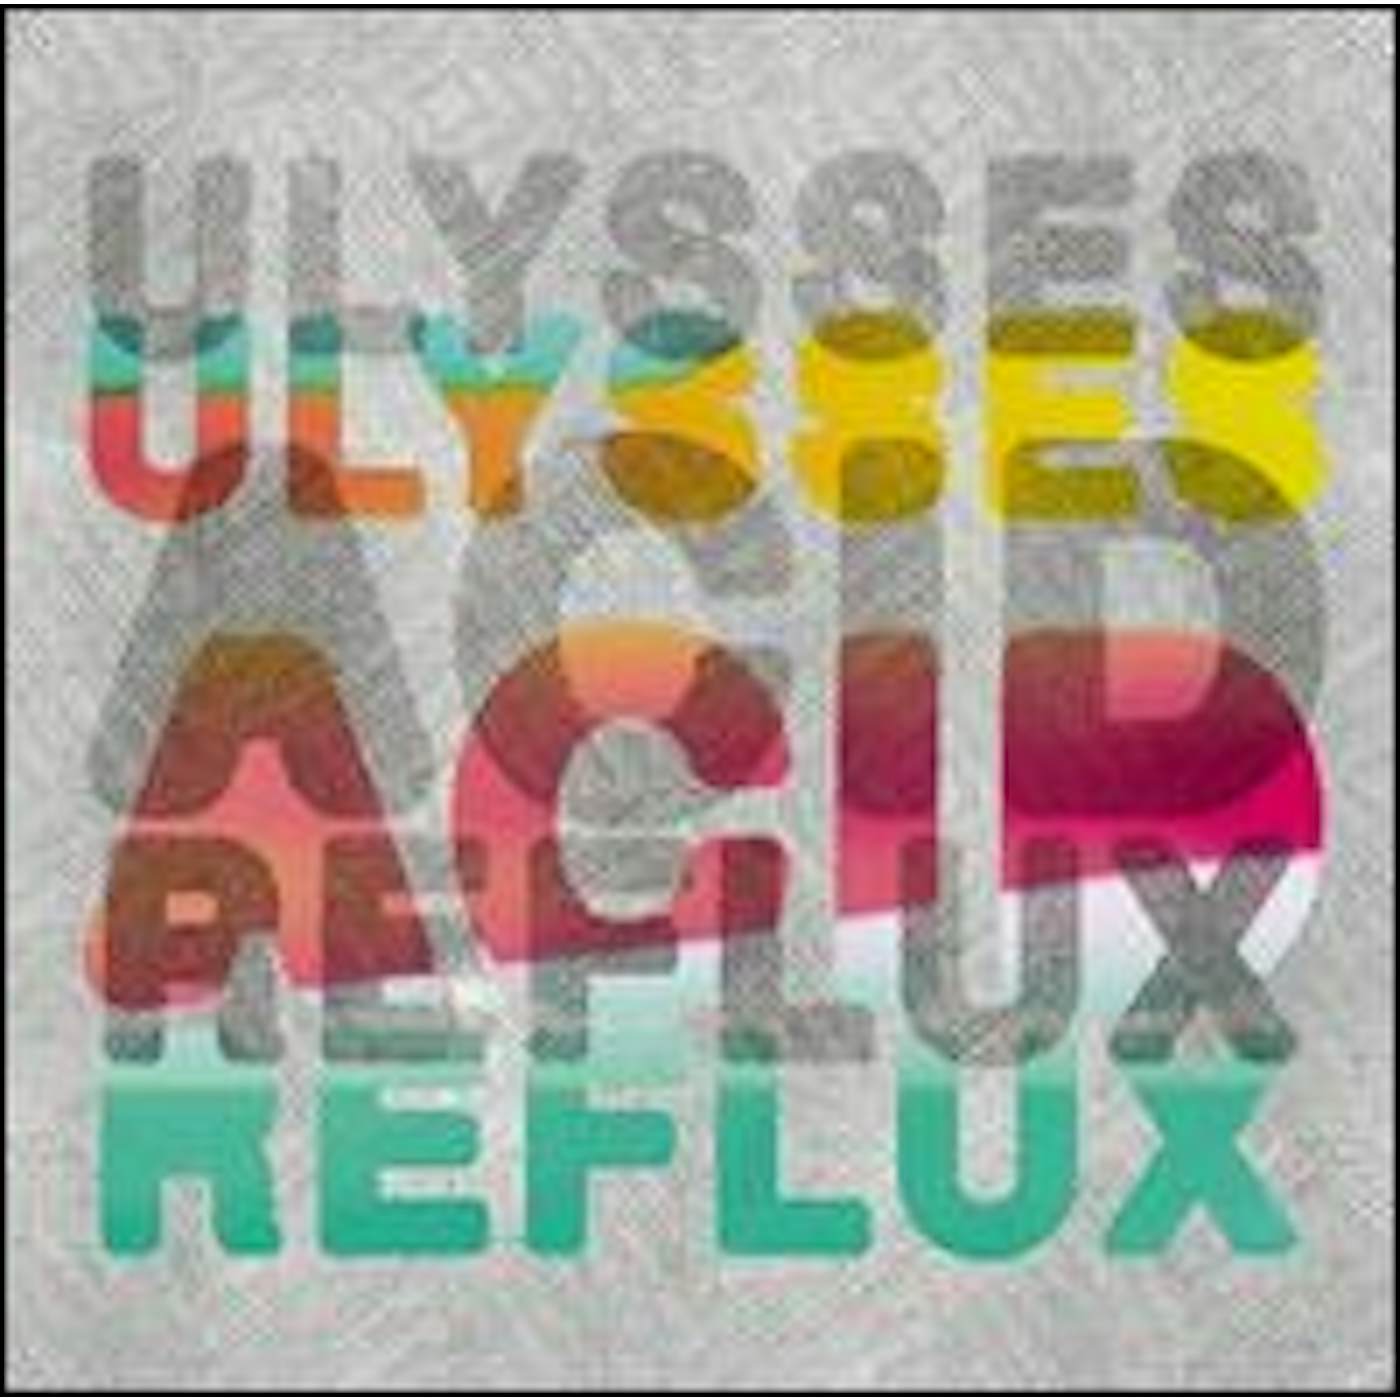 ULYSSES ACID REFLUX Vinyl Record